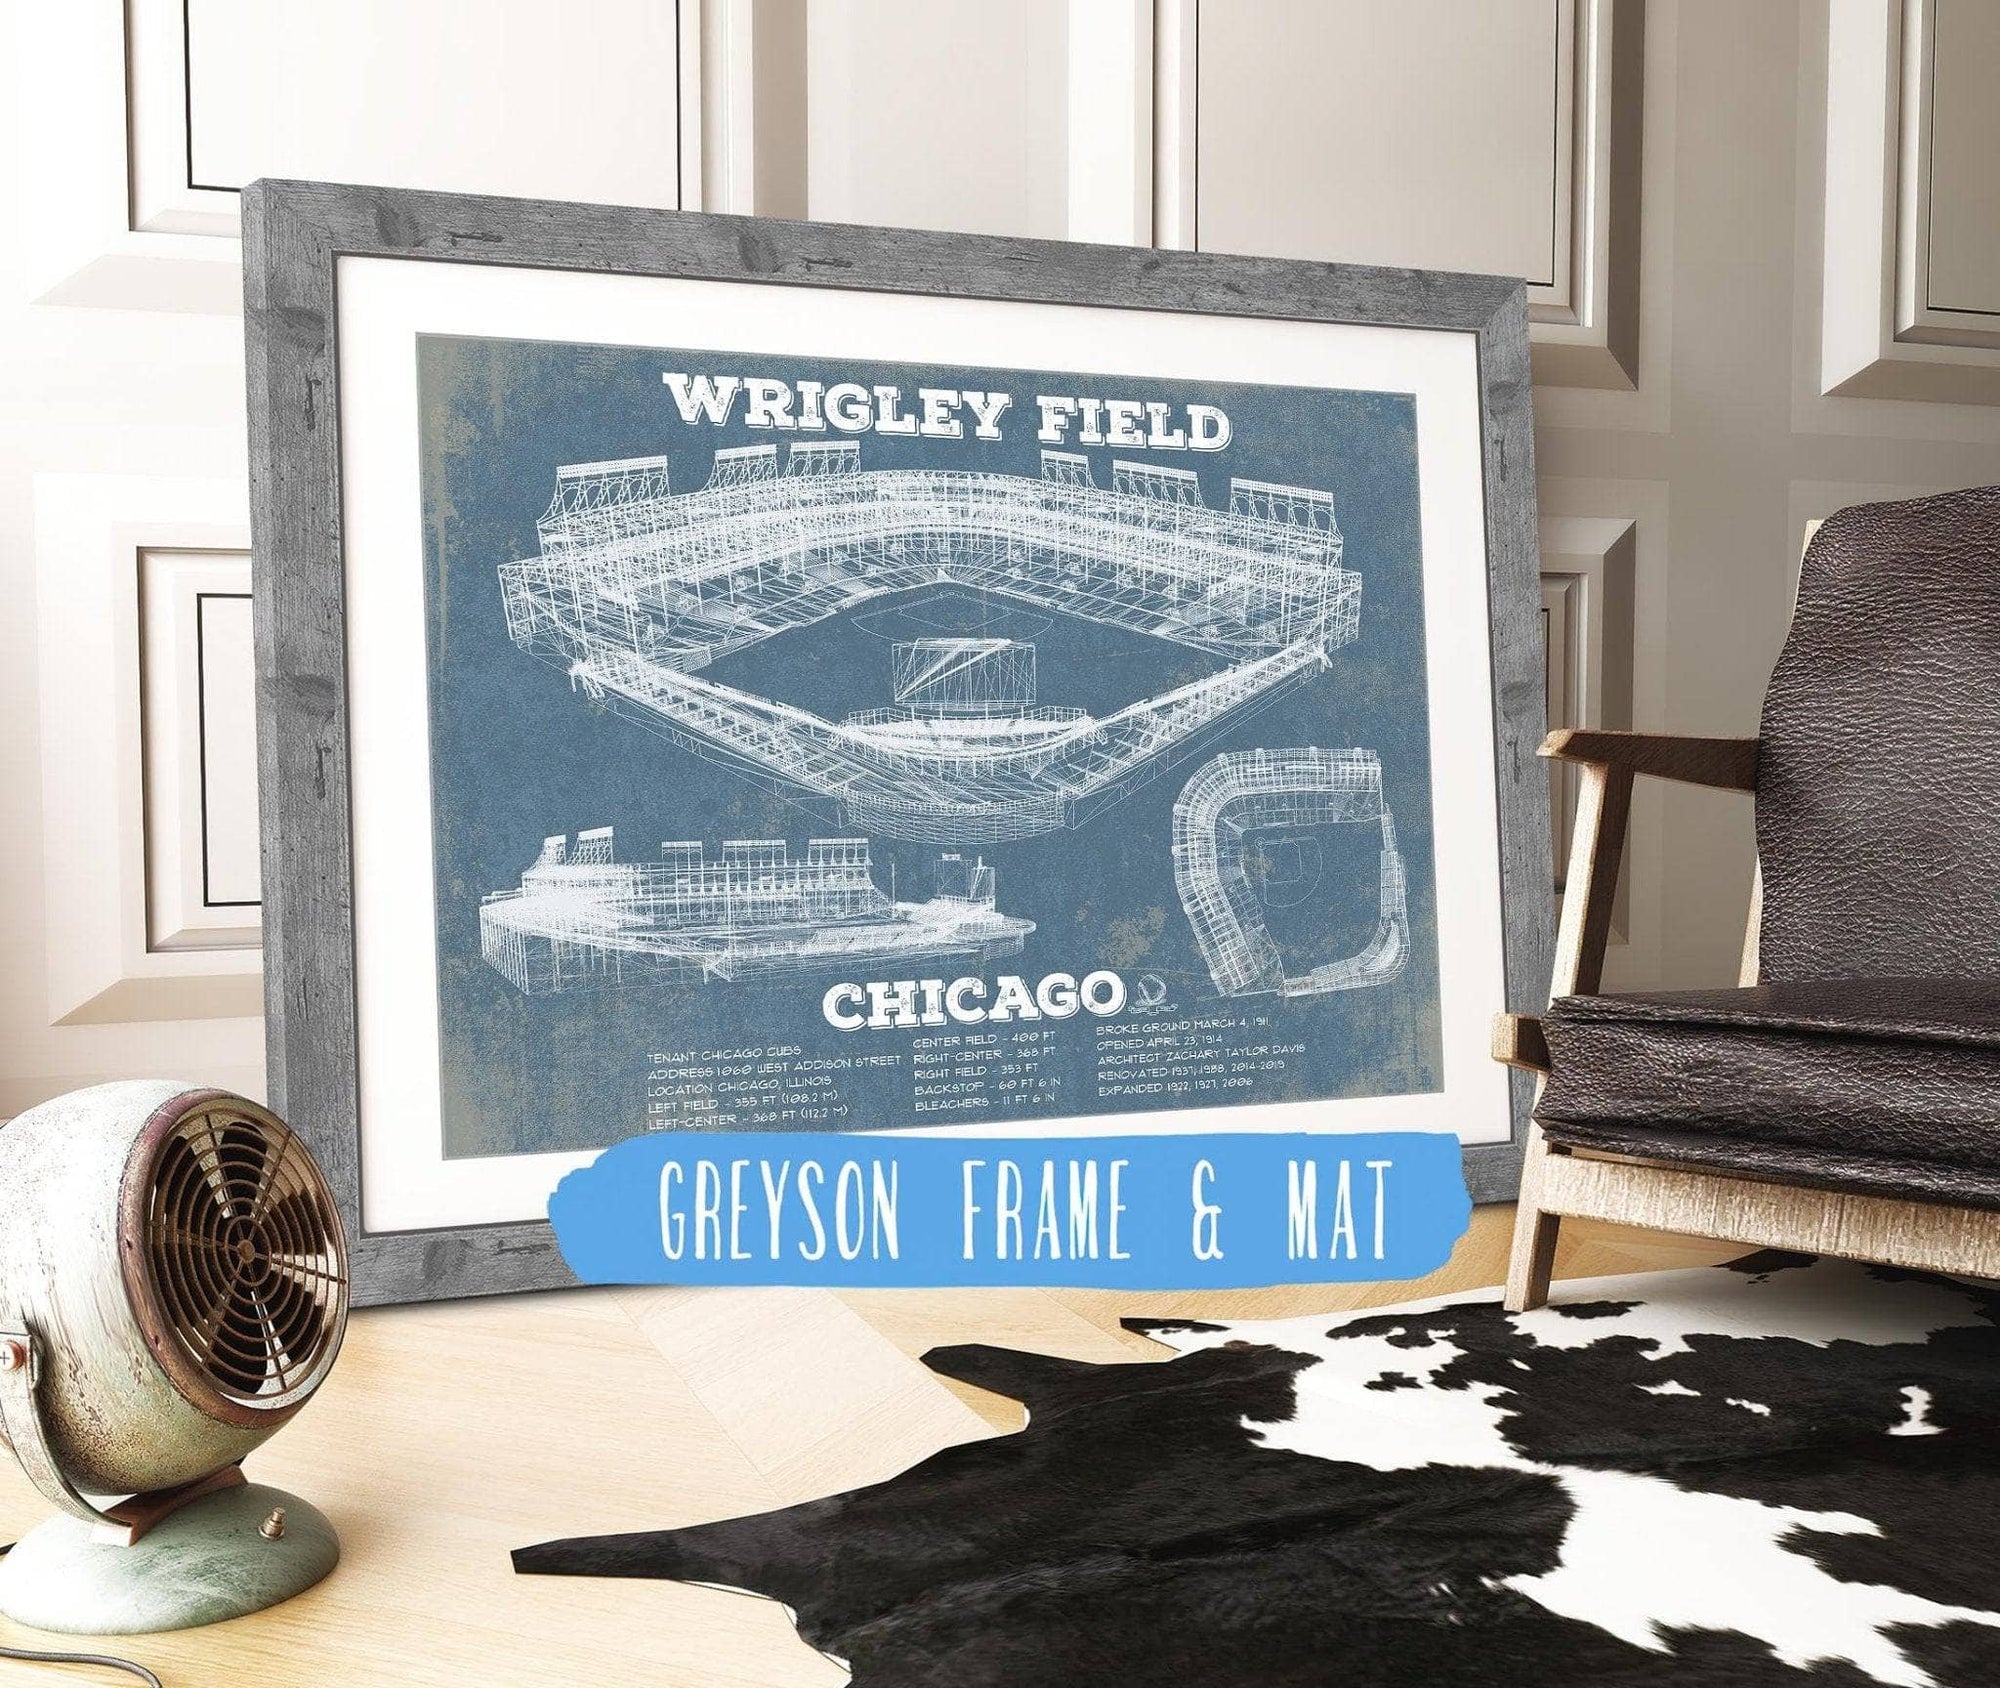 Cutler West Baseball Collection 14" x 11" / Greyson Frame & Mat Vintage Wrigley Field Print - Chicago Cubs Baseball Print 703108870-TOP